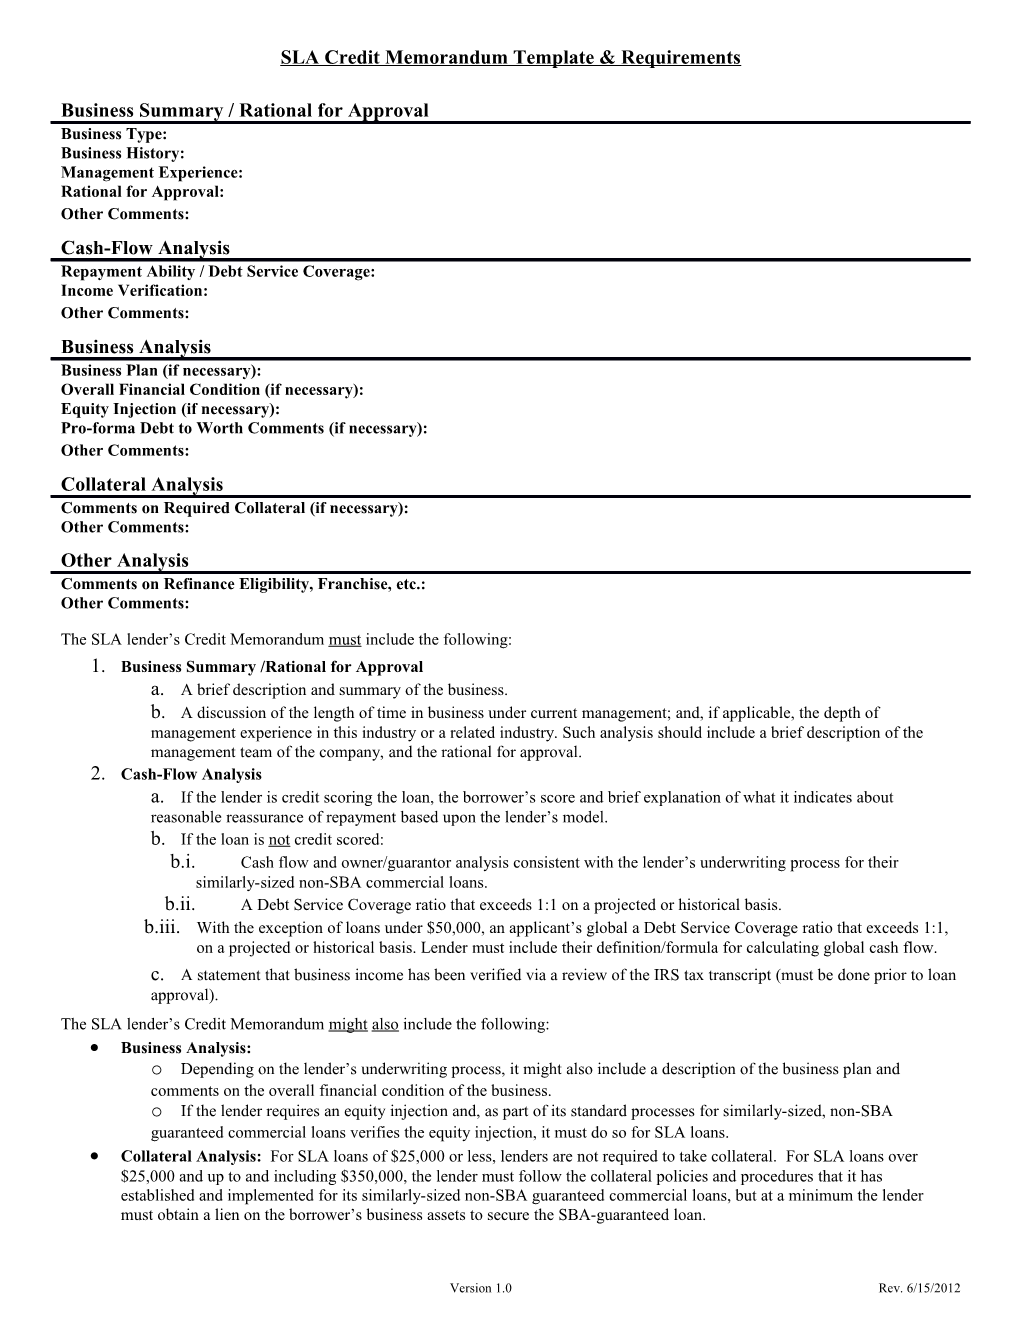 SLA Credit Memorandum Template & Requirements